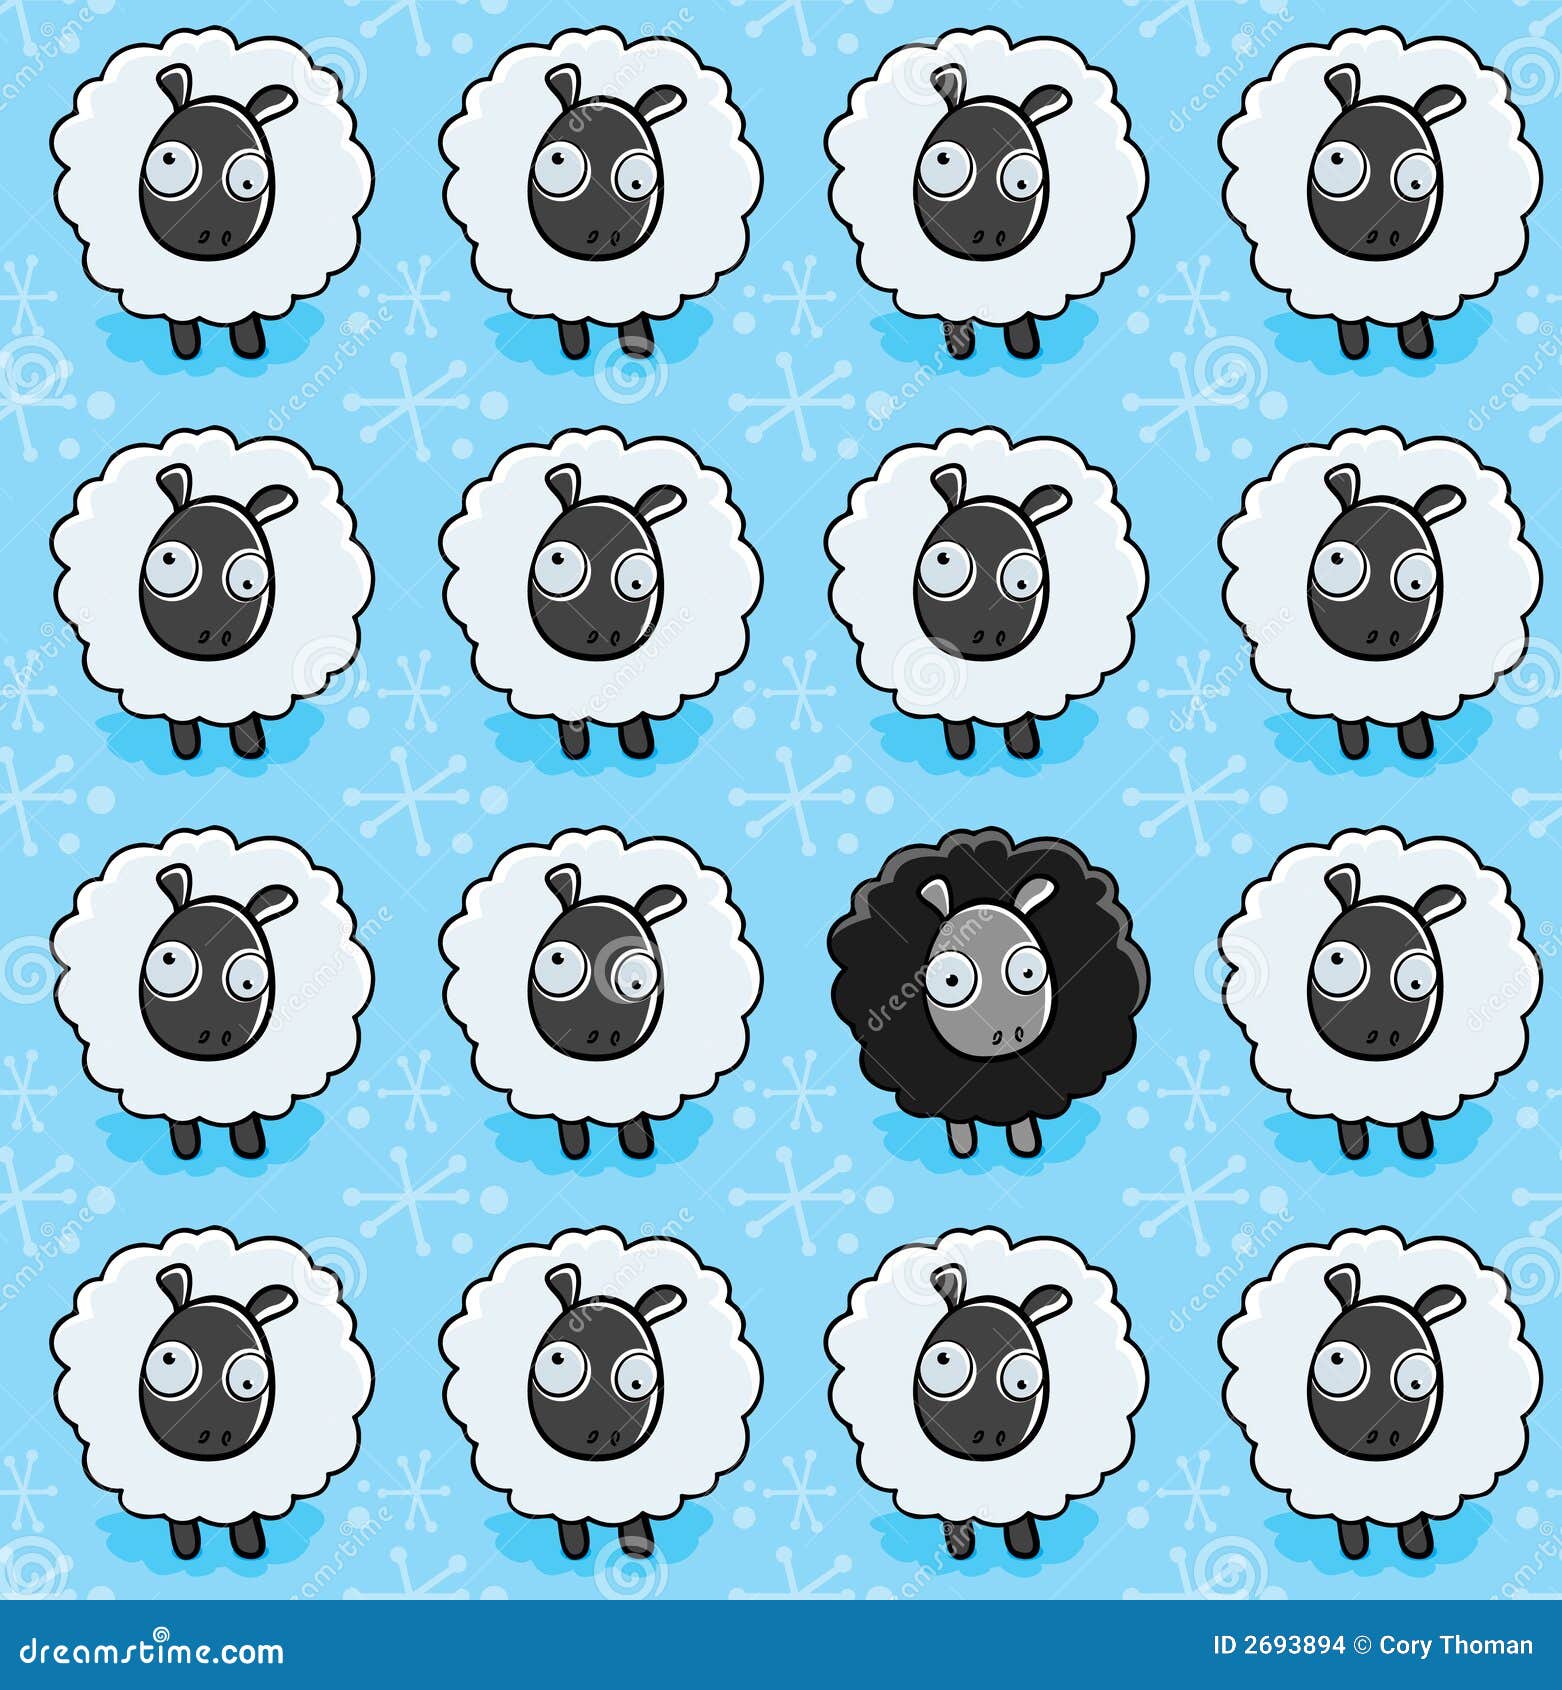 stuffed-sheep